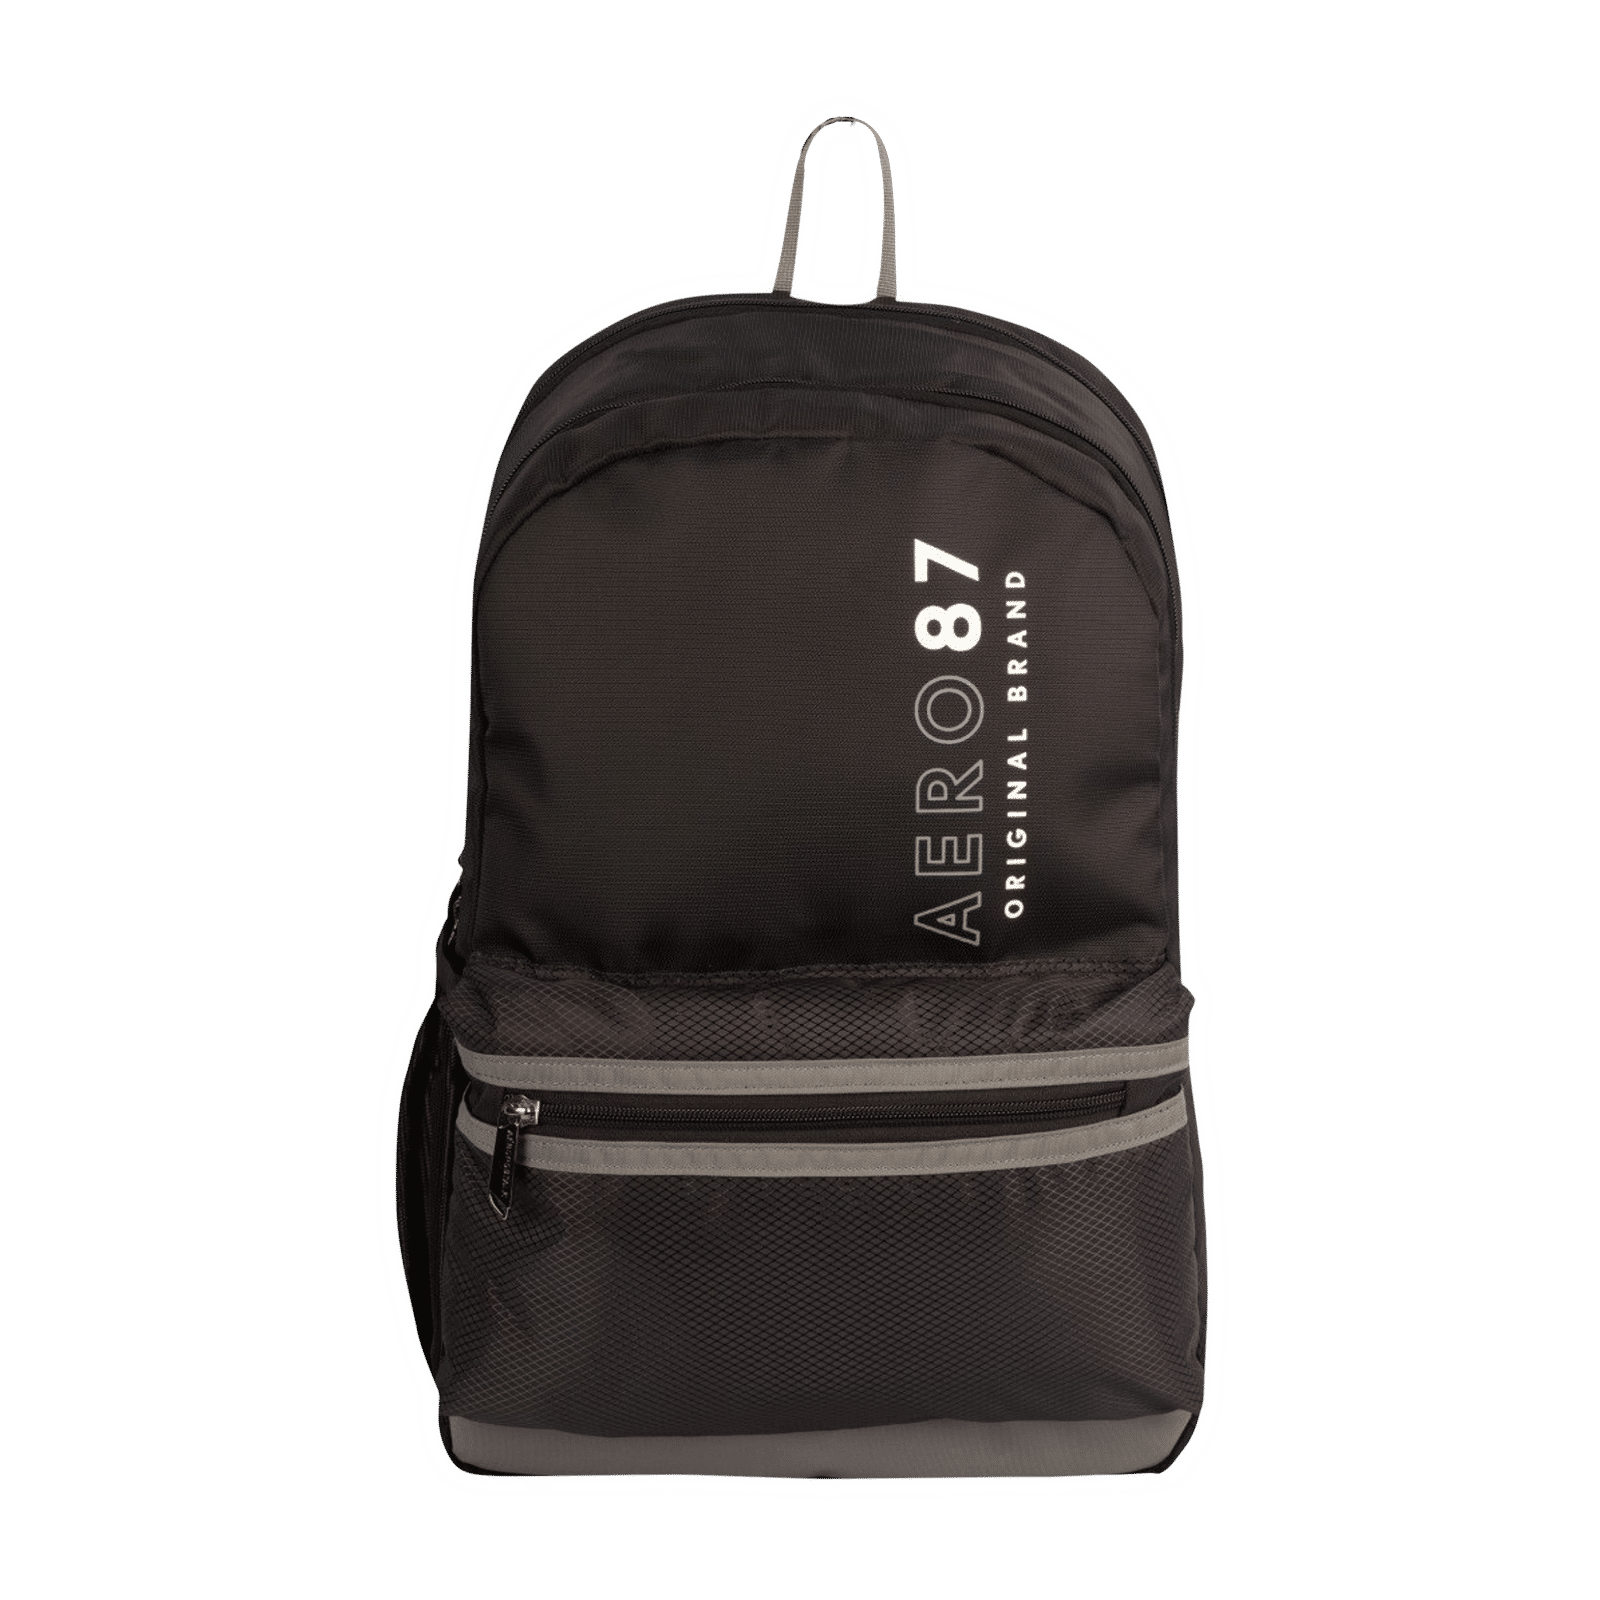 Best Anti Theft Bag & Backpacks | Black Anti Theft Bag | uppercase